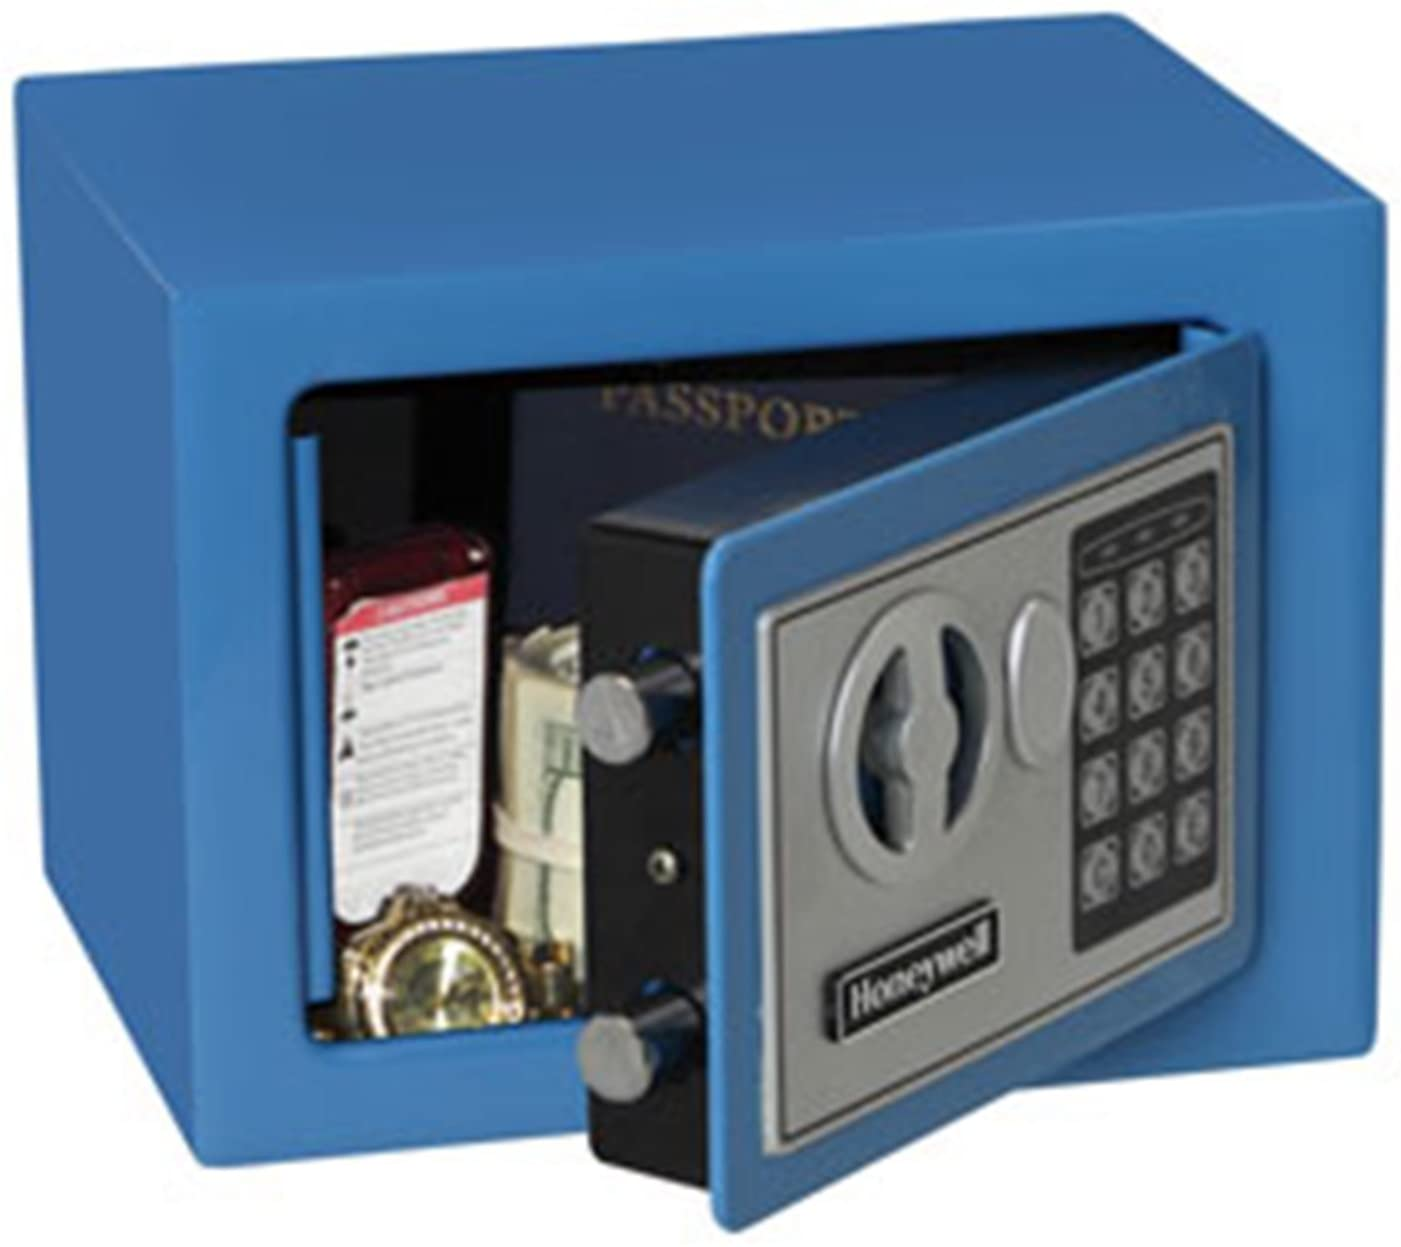 Honeywell - 5005B Steel Security Safe with Digital Lock, 0.17-Cubic Feet, Blue - - Amazon.com $39